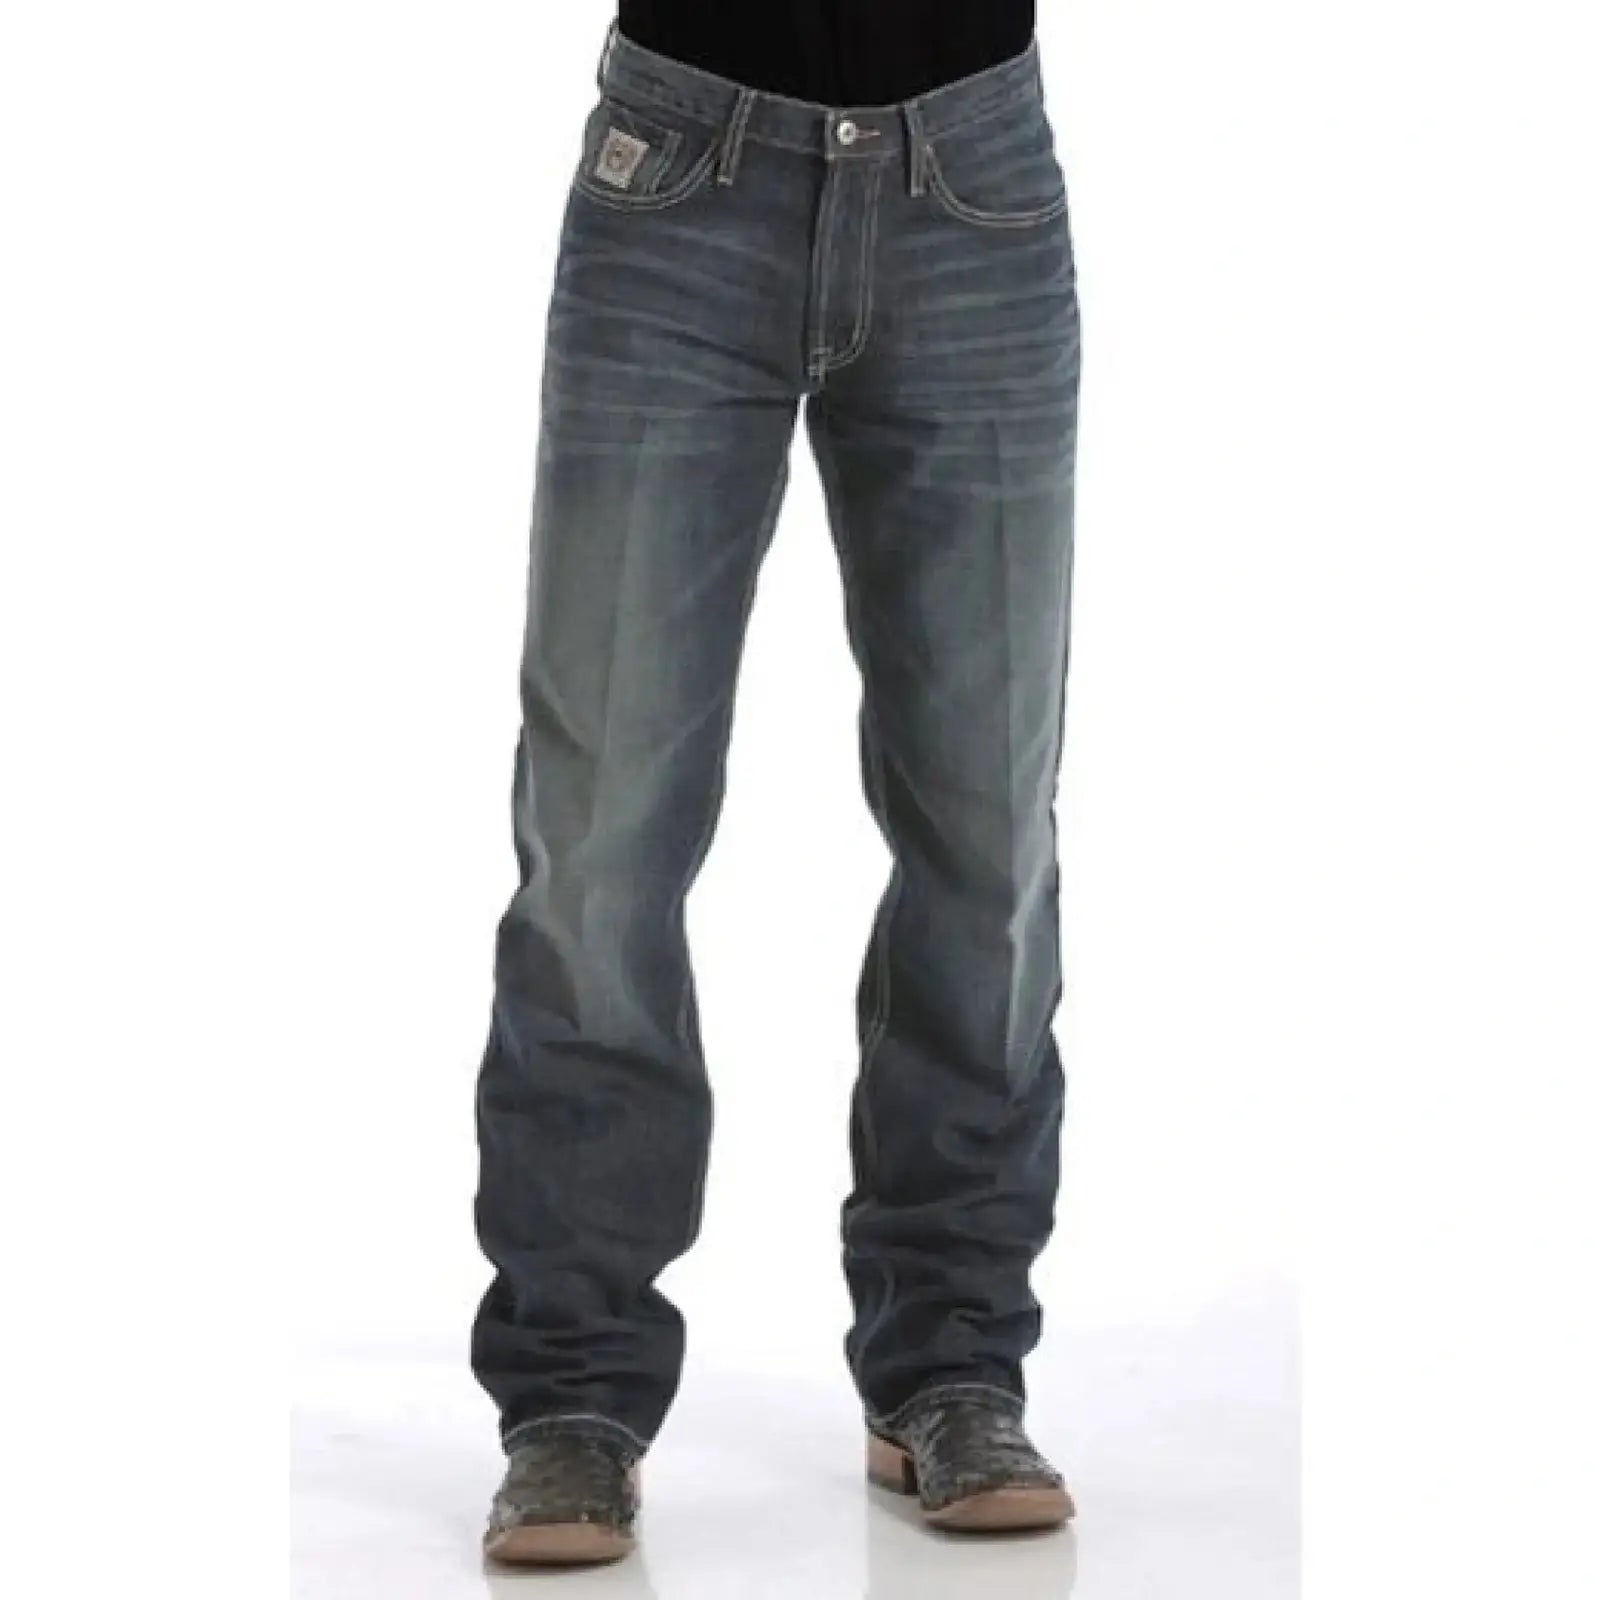 Cinch Men's Jeans White Label Mid Rise Straight Leg MB92834019 - Cinch